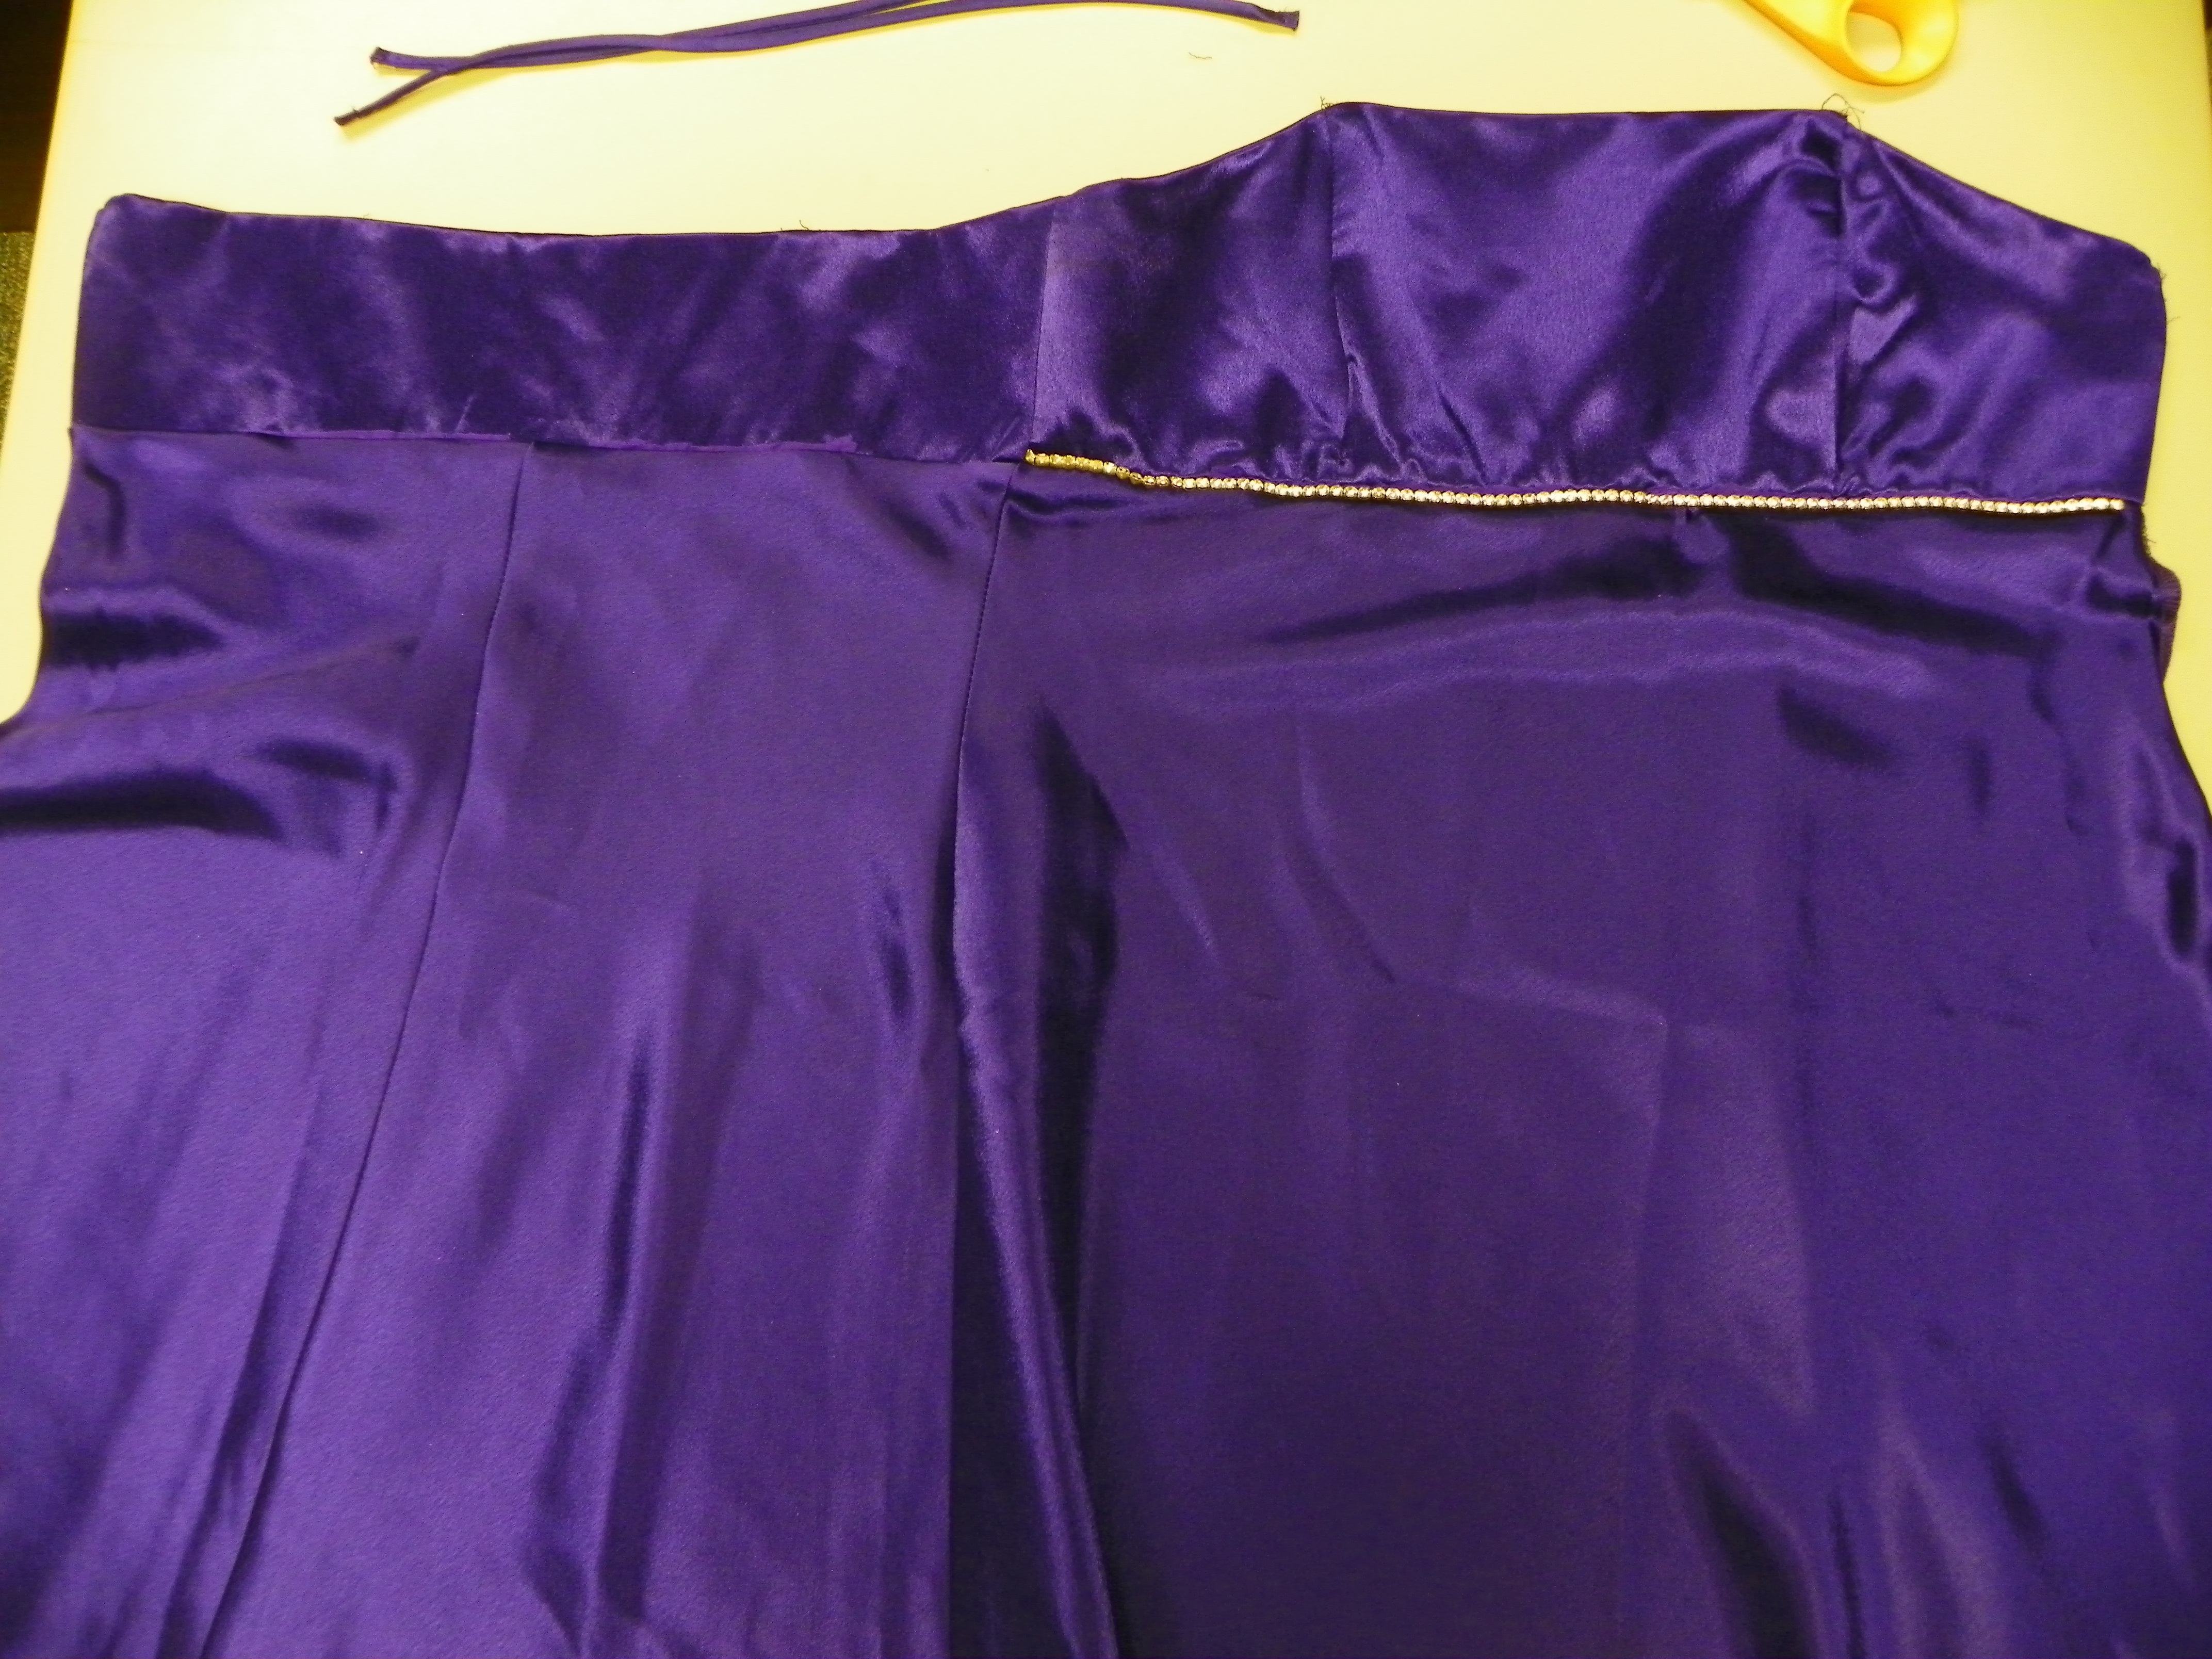 dress purple contest 019.jpg